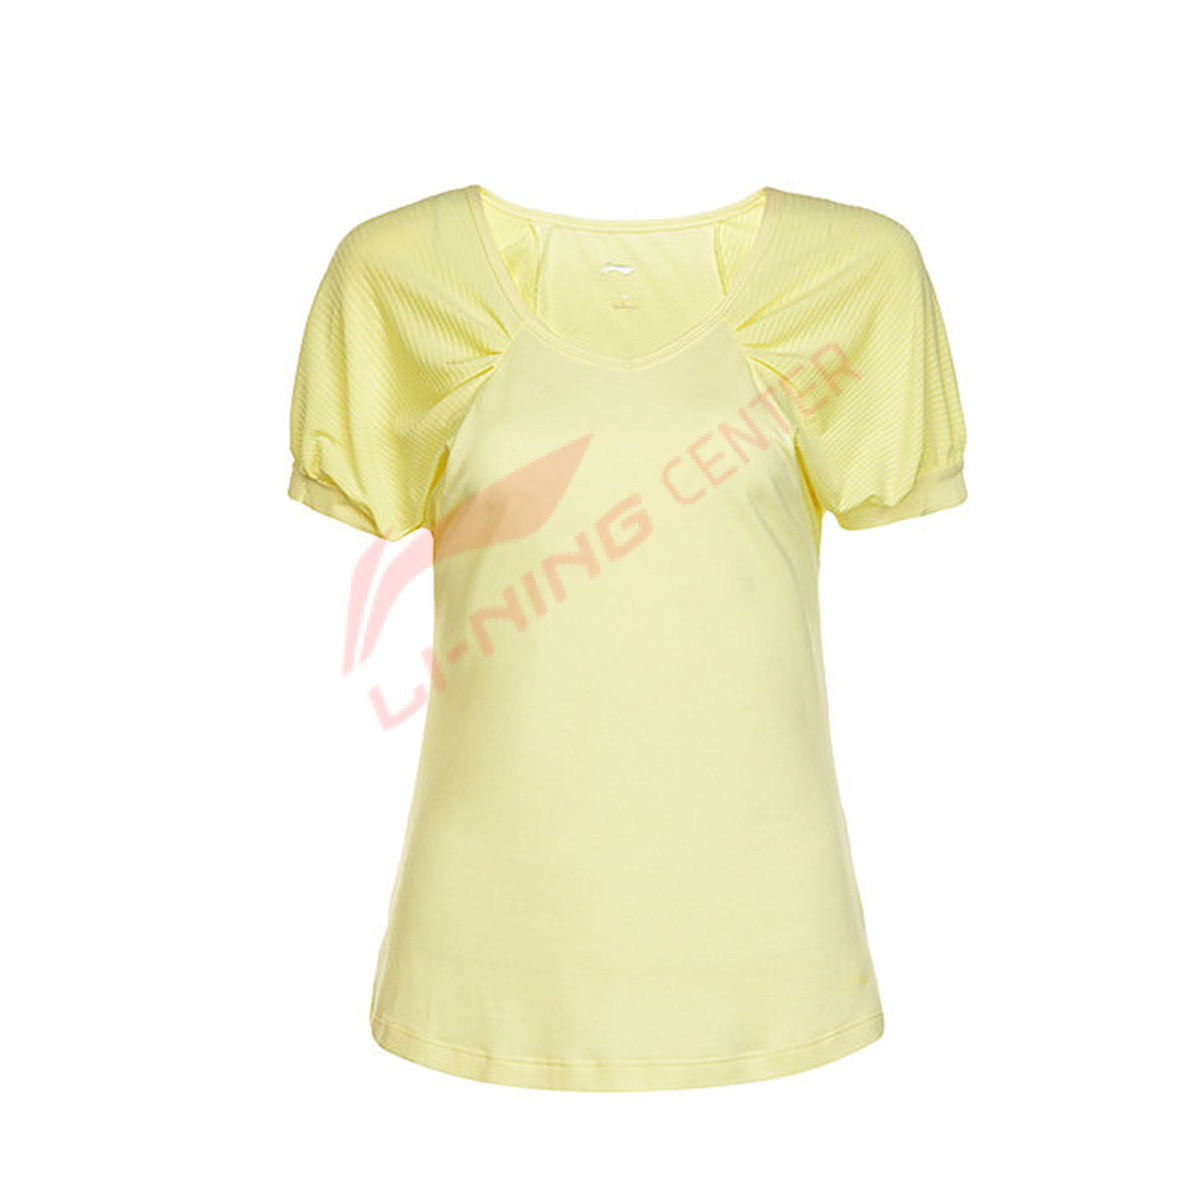 Женская футболка LI-NING LNCH082-2 (размеры: L, XL, 2XL)